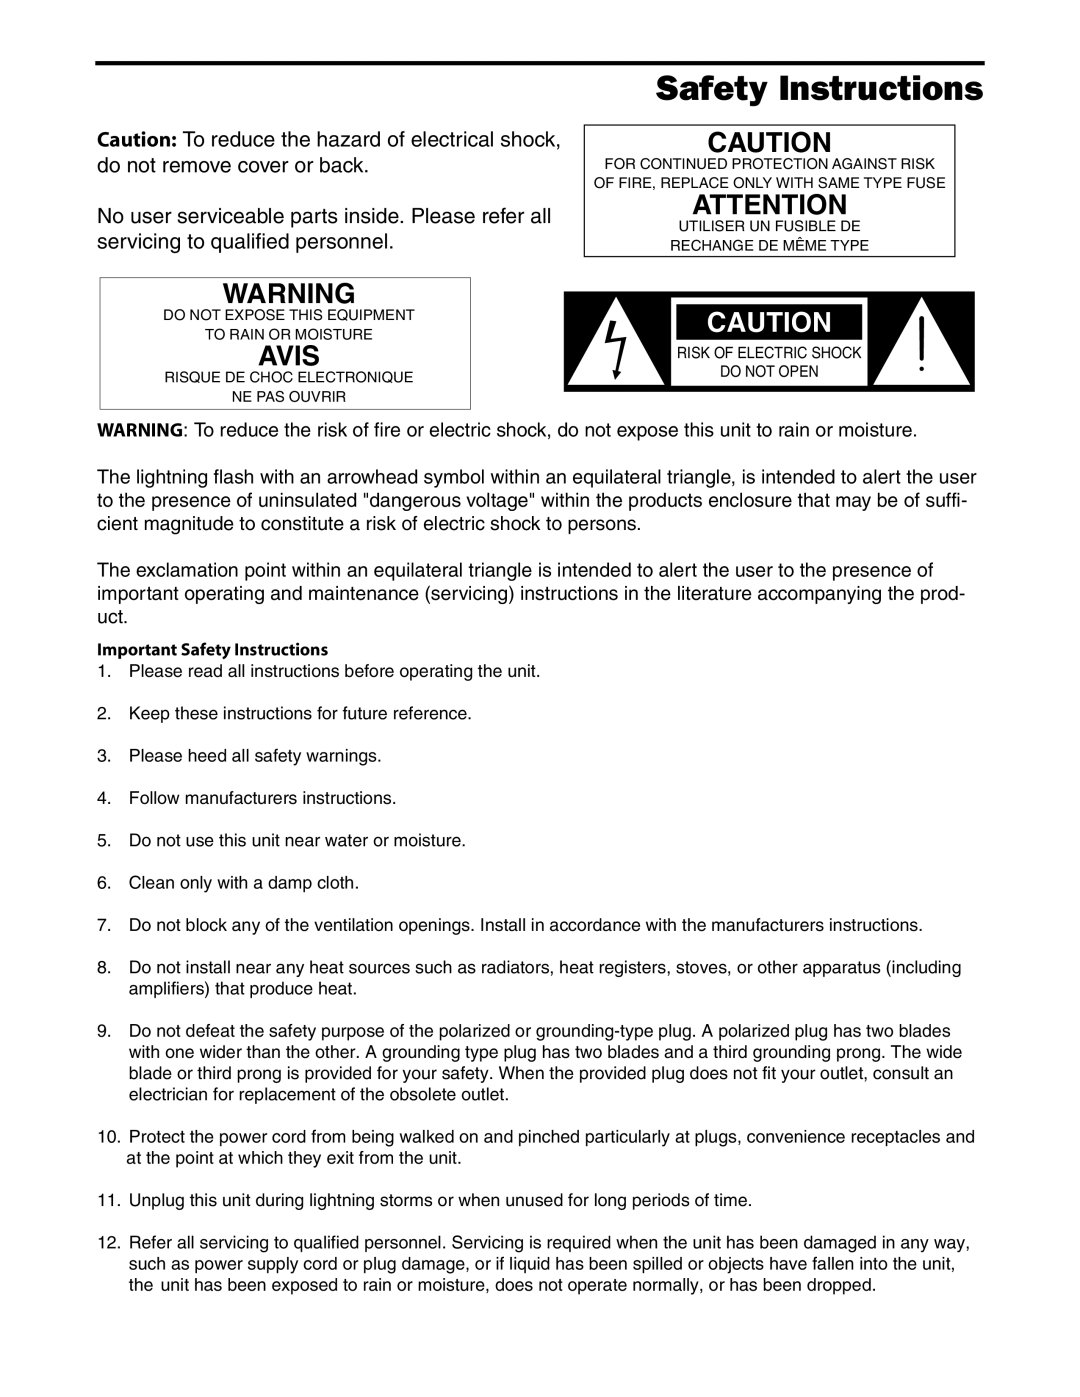 Samson EX500 owner manual Safety Instructions, Avis 